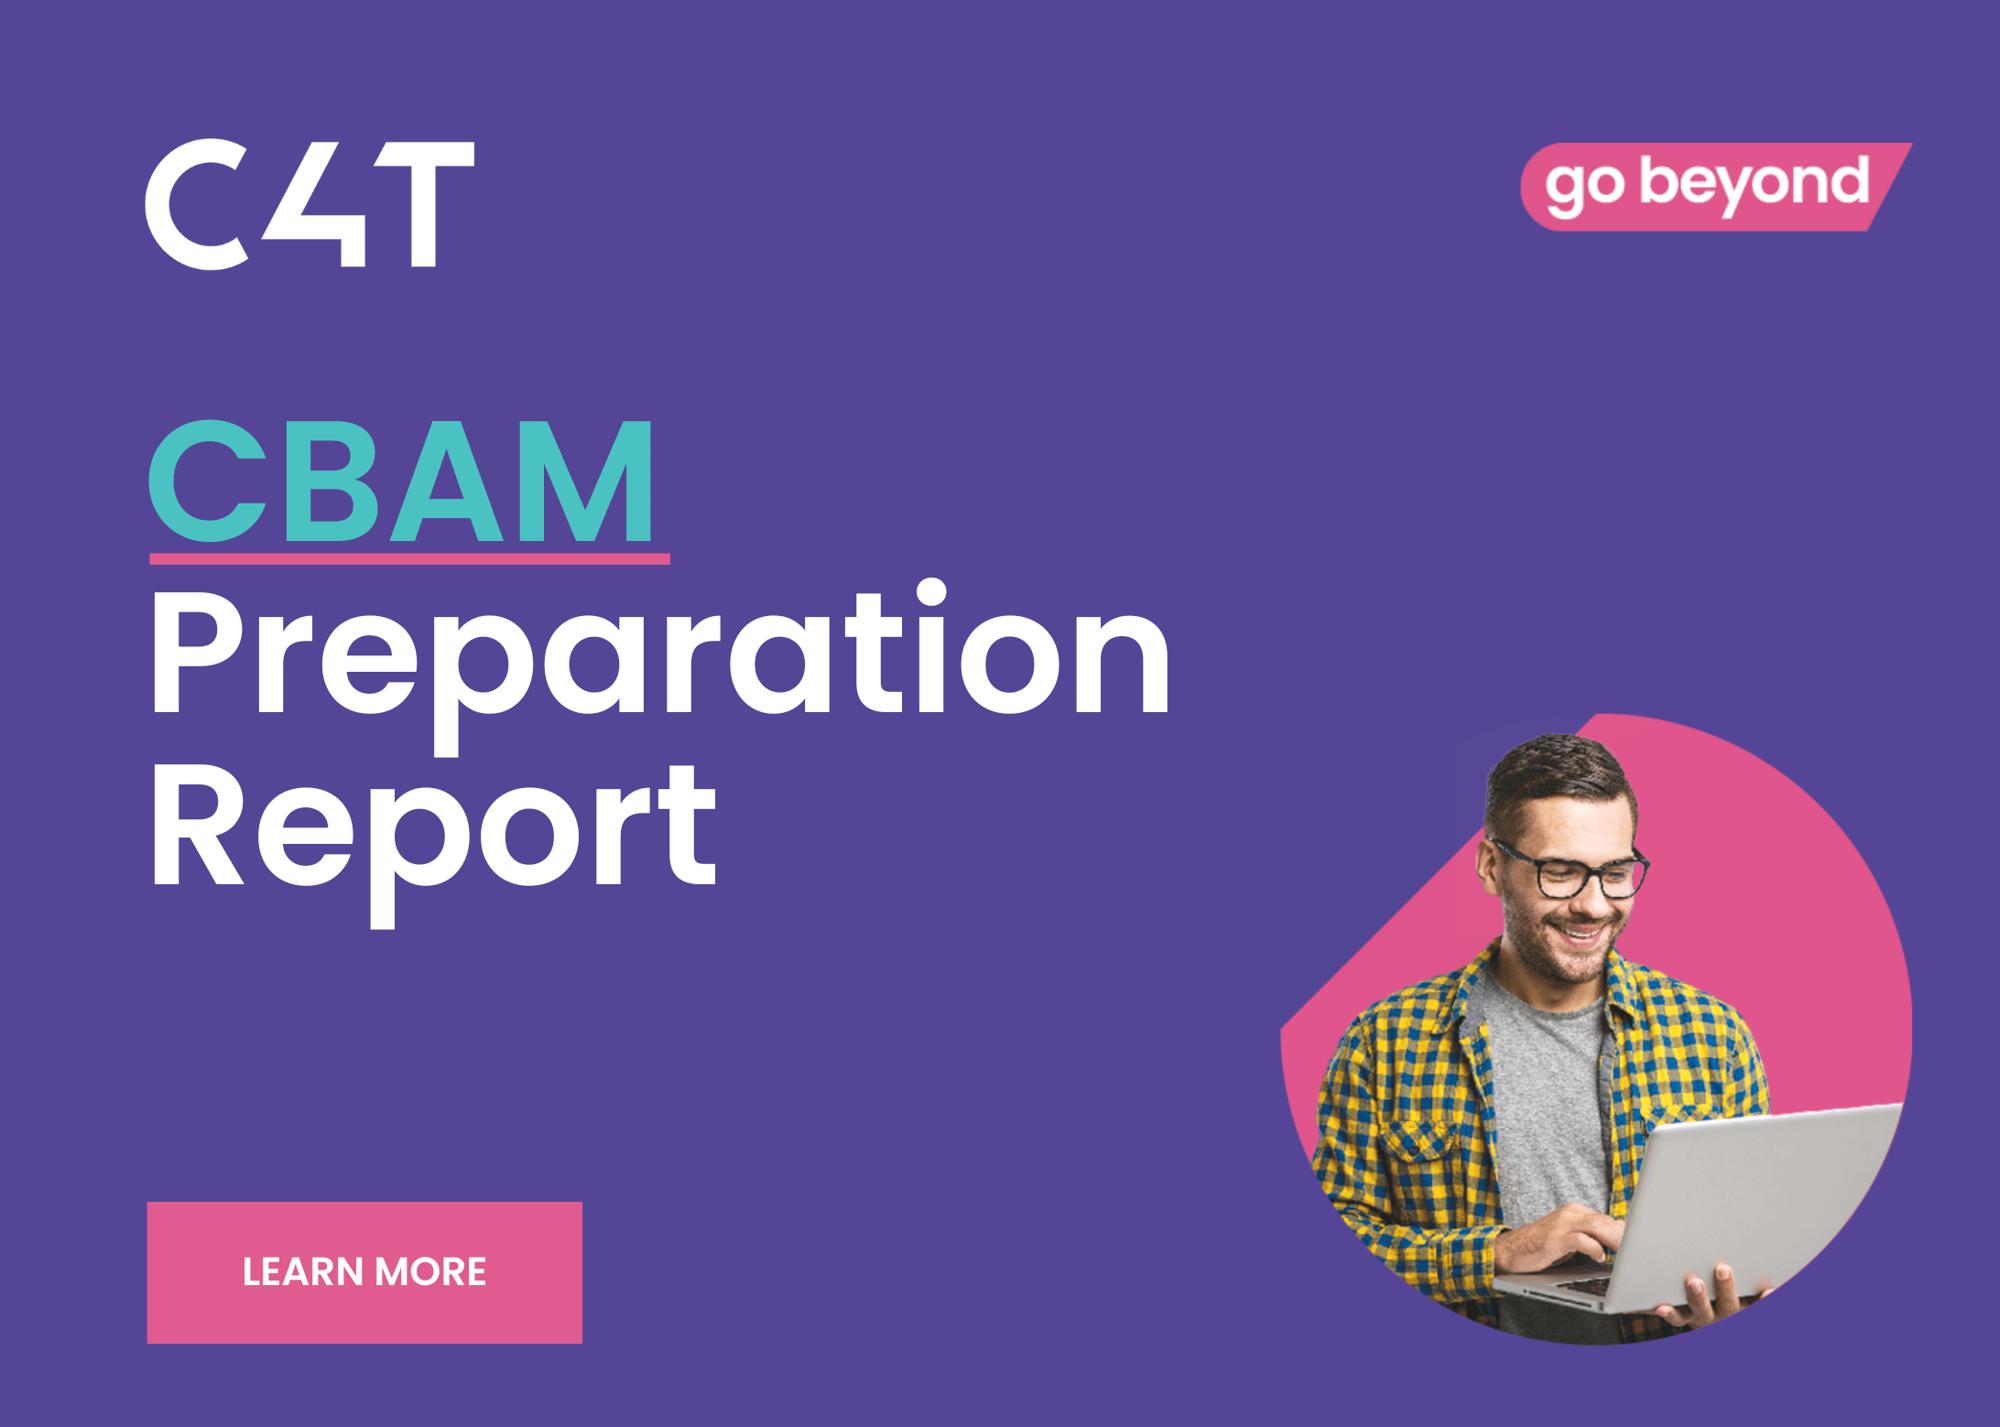 CBAM preparation report landing page image